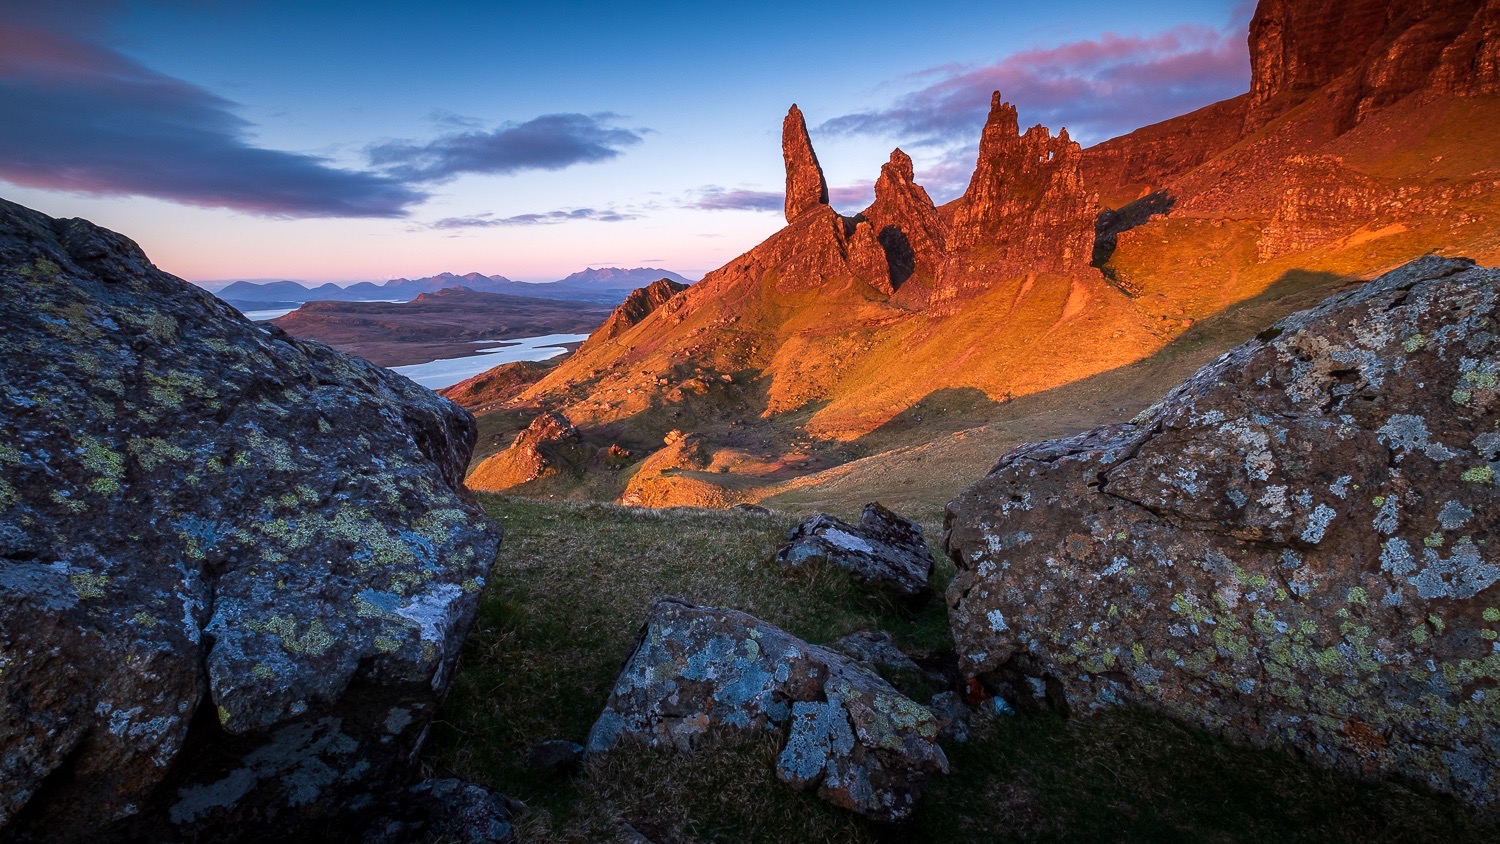 0075-scotland-tamron-le monde de la photo-paysage-20190511062726-compress.jpg